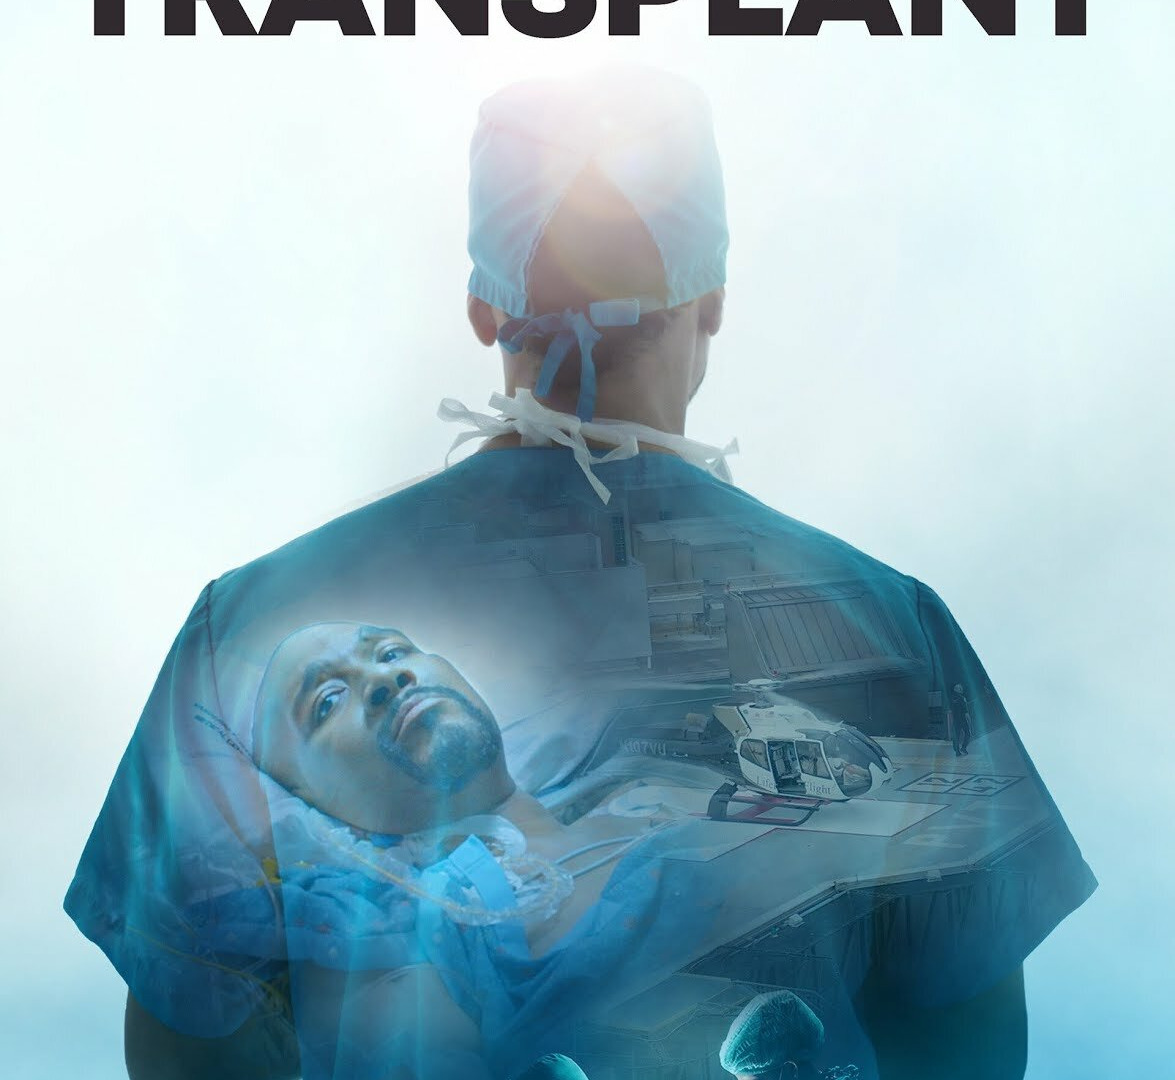 Show Last Chance Transplant